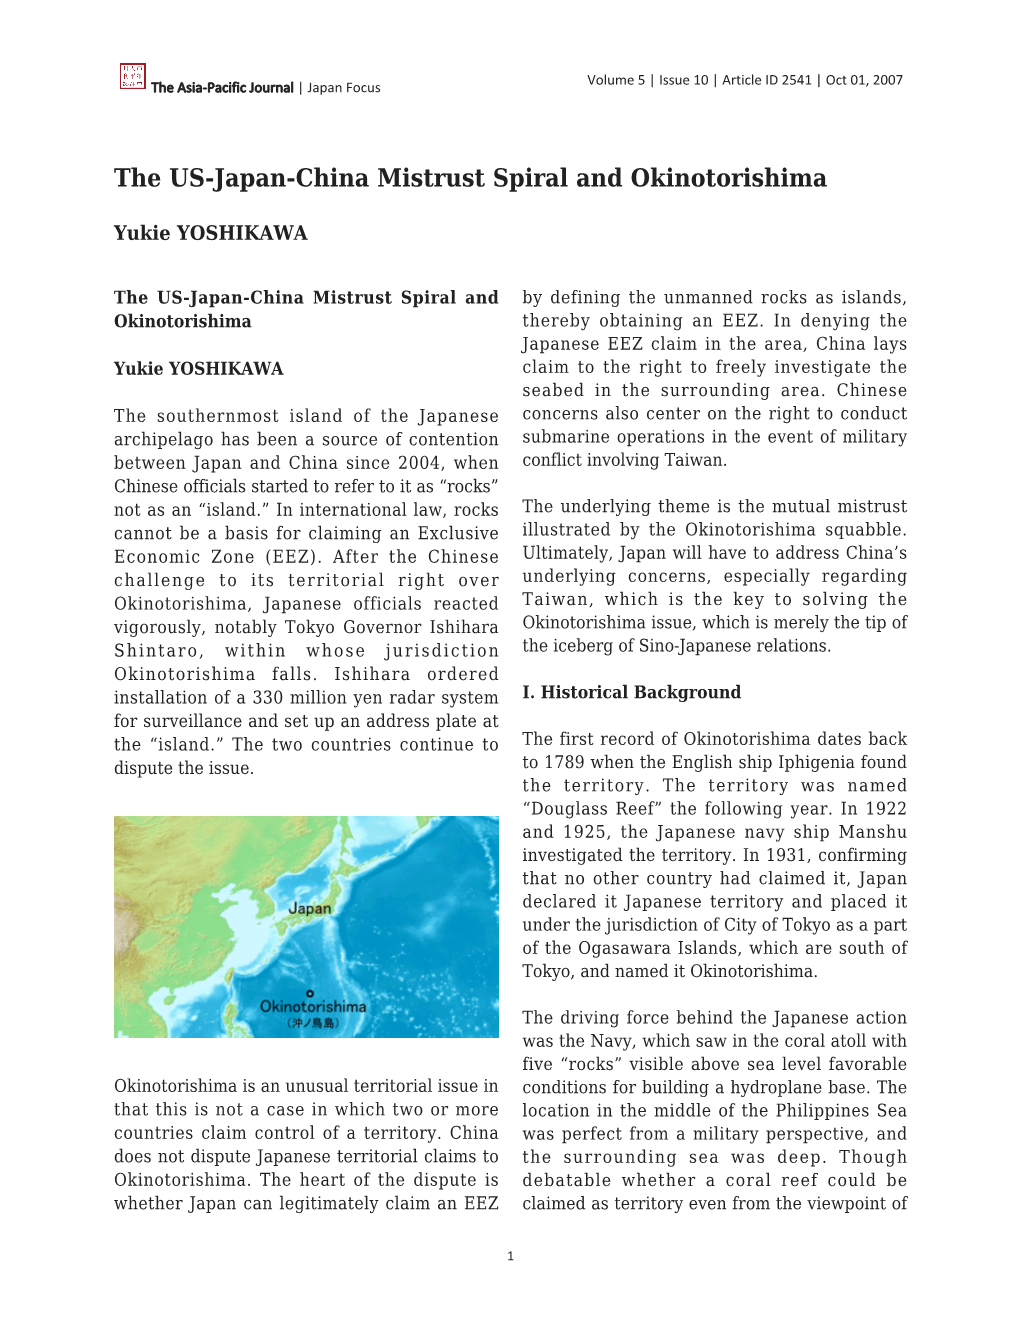 The US-Japan-China Mistrust Spiral and Okinotorishima